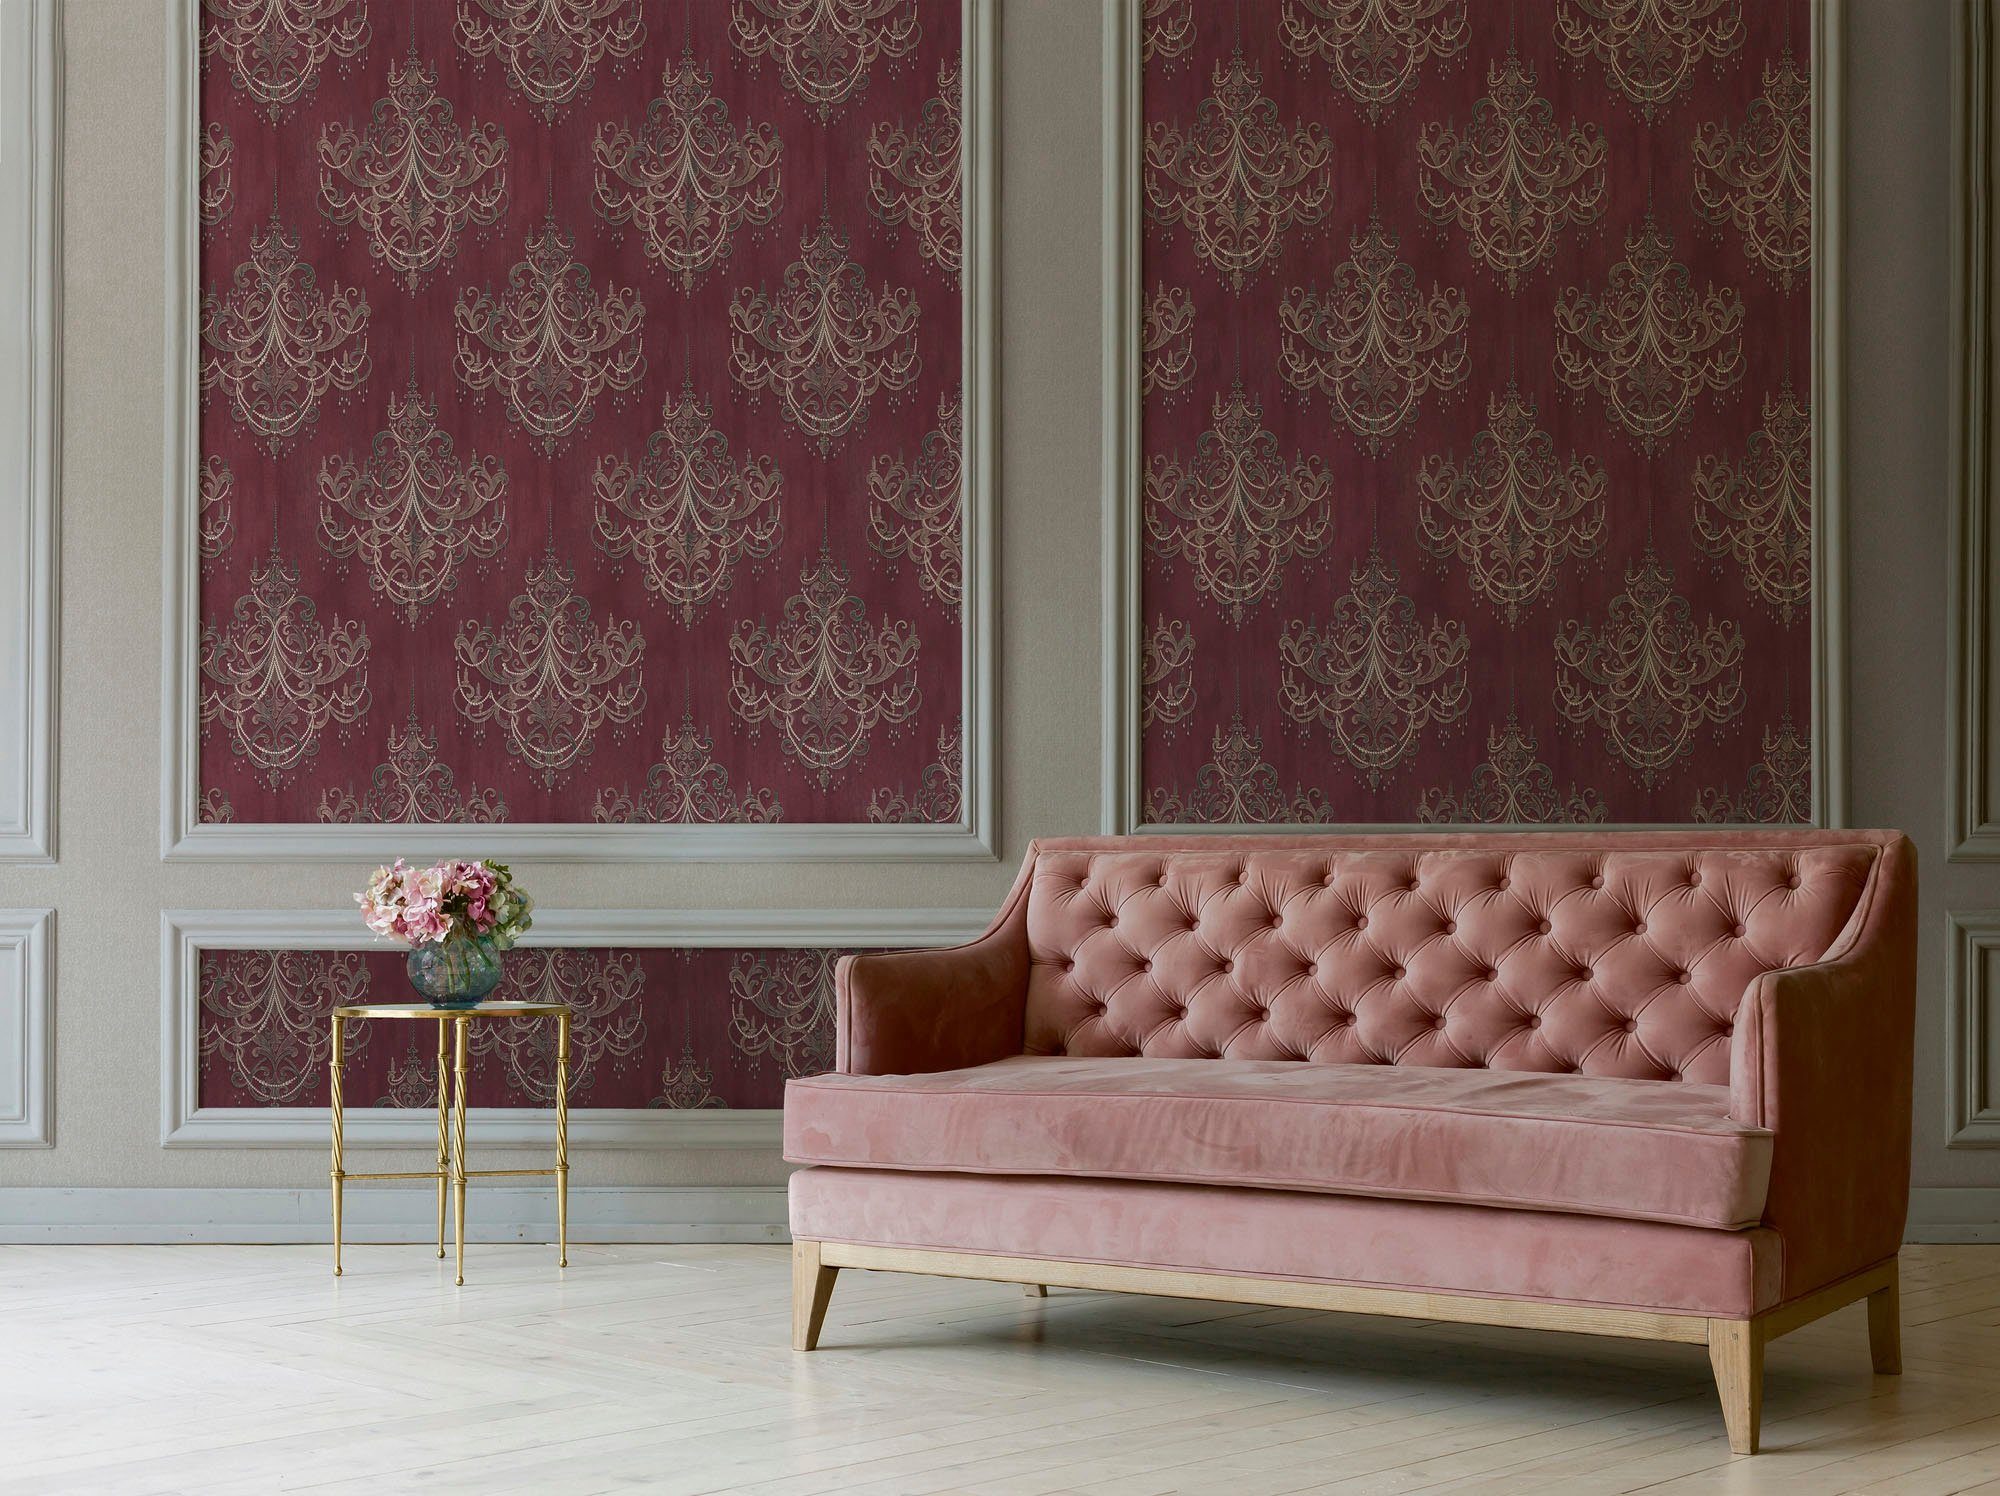 living walls Vliestapete Mata ornamental, Hari, dunkelrot/rosa strukturiert, gemustert, Tapete Barock Ornament Barock